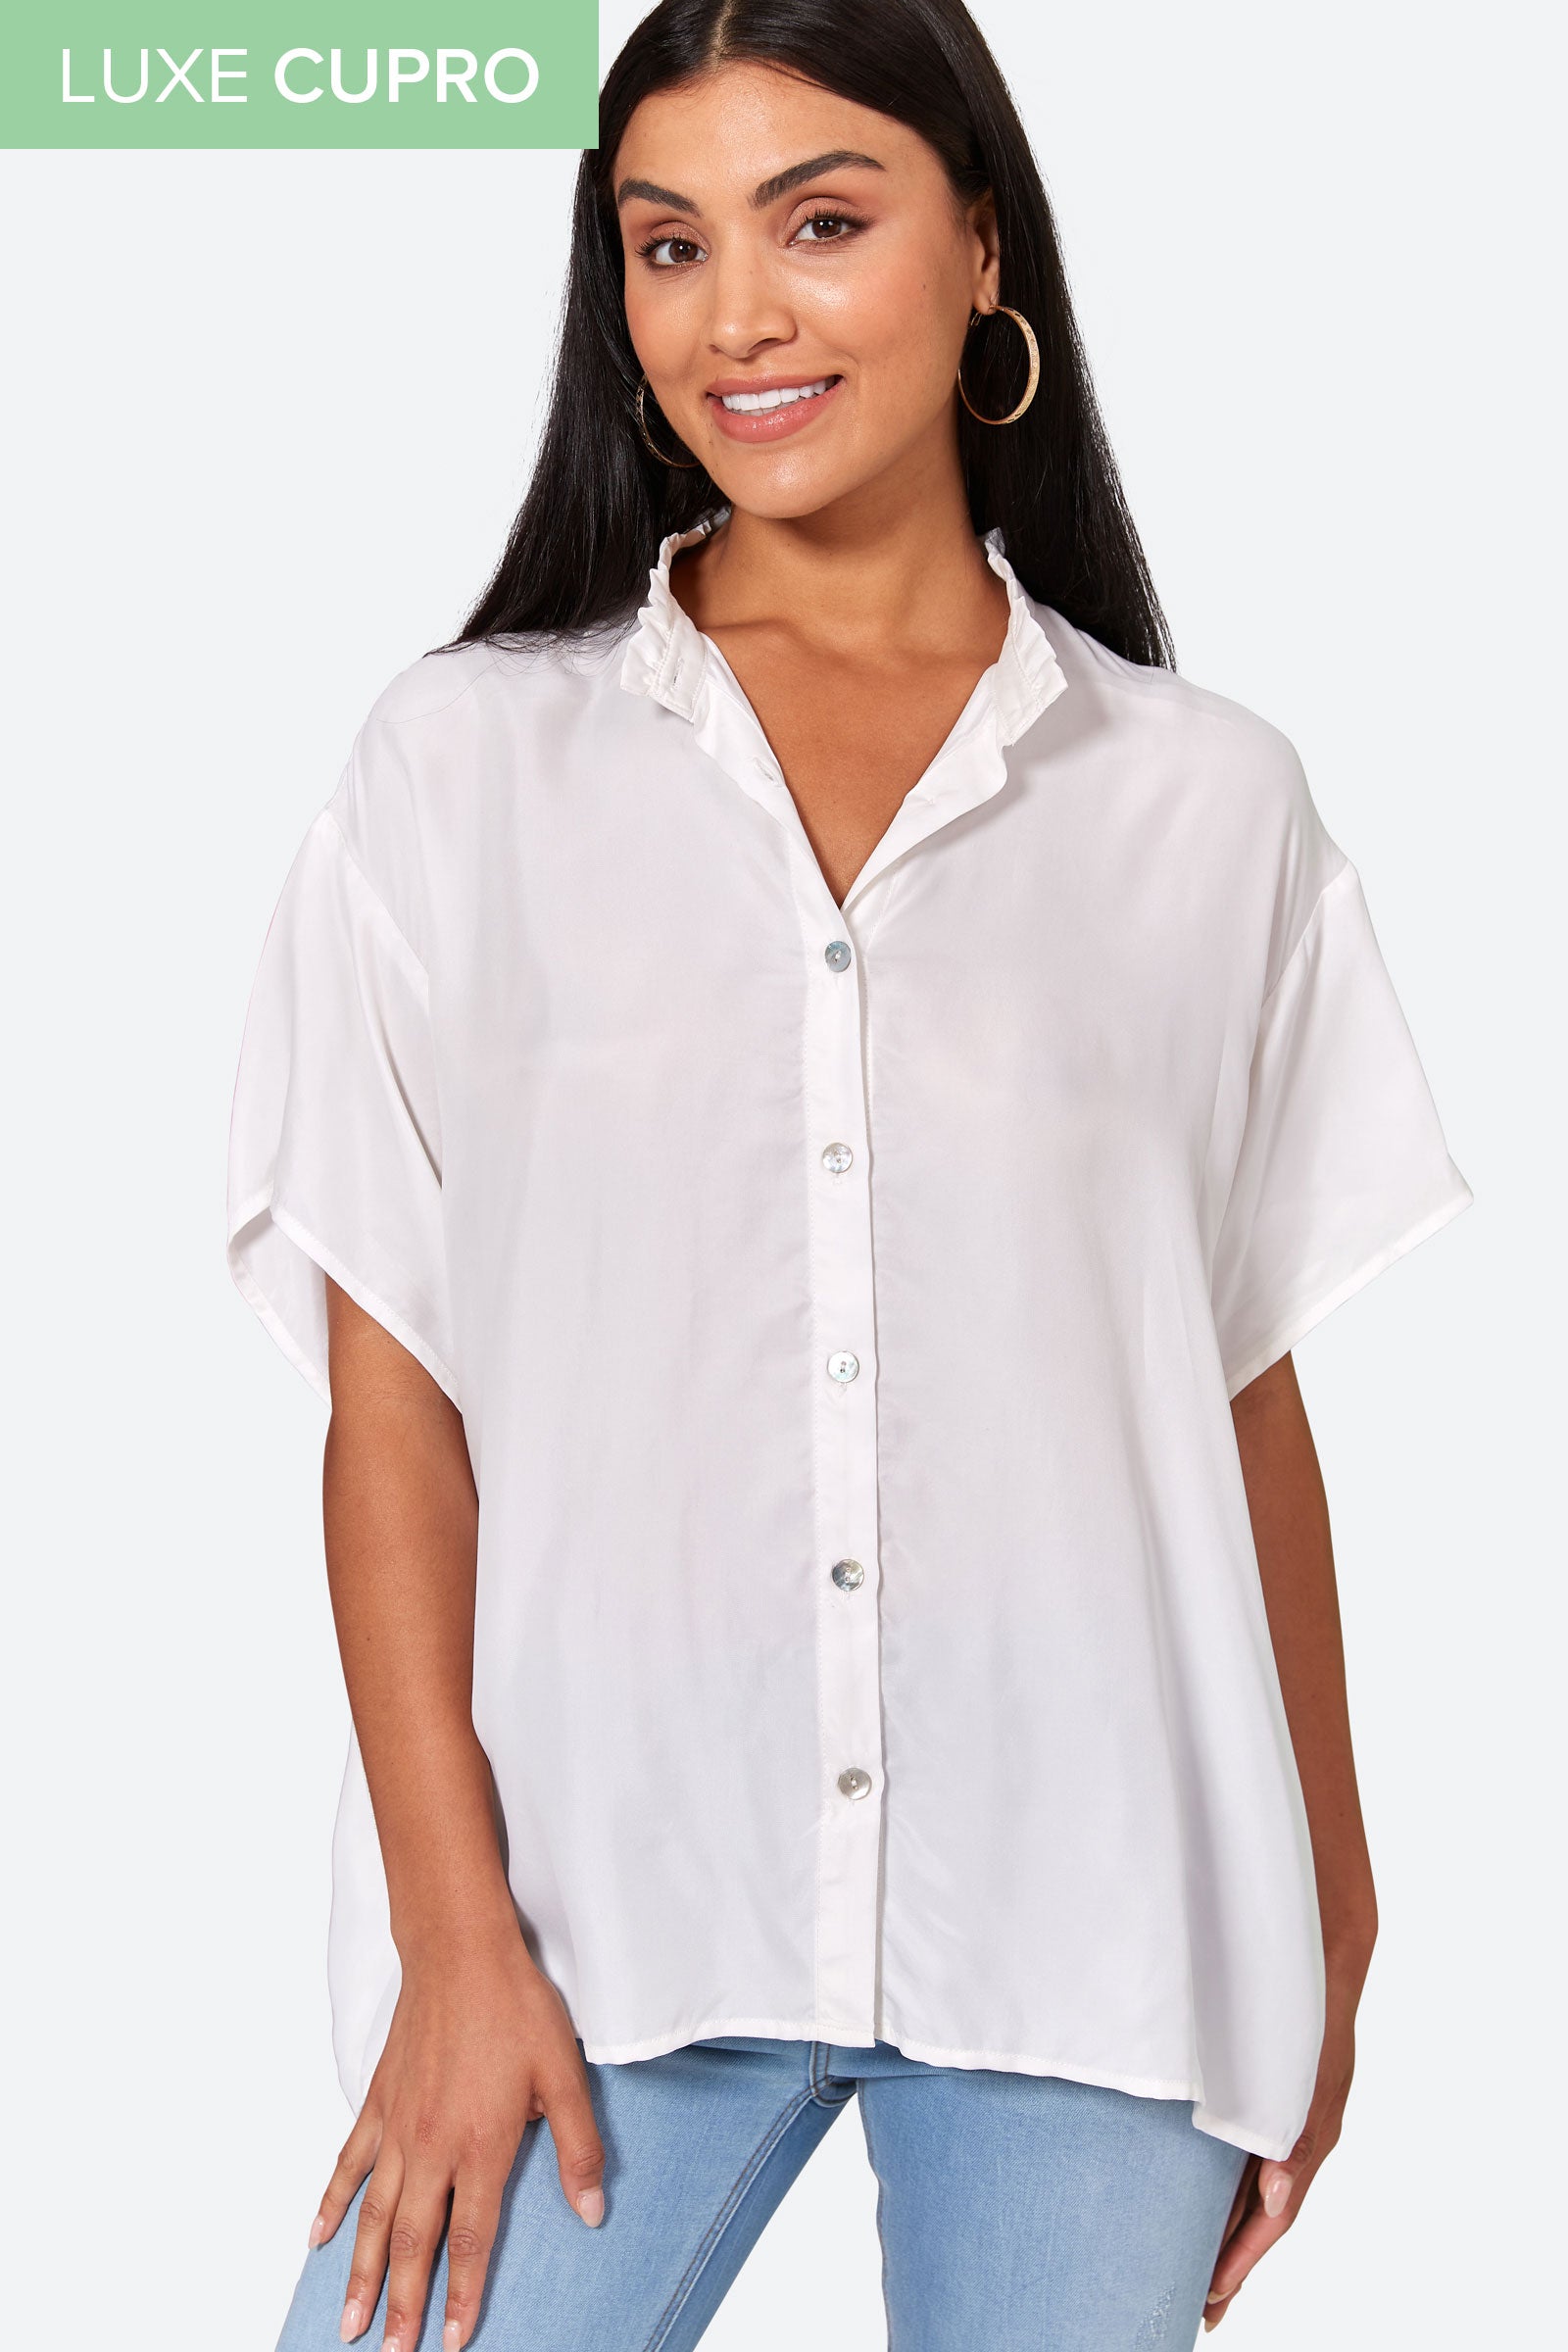 Elixir Shirt - Blanc - eb&ive Clothing - Shirt S/S Cupro